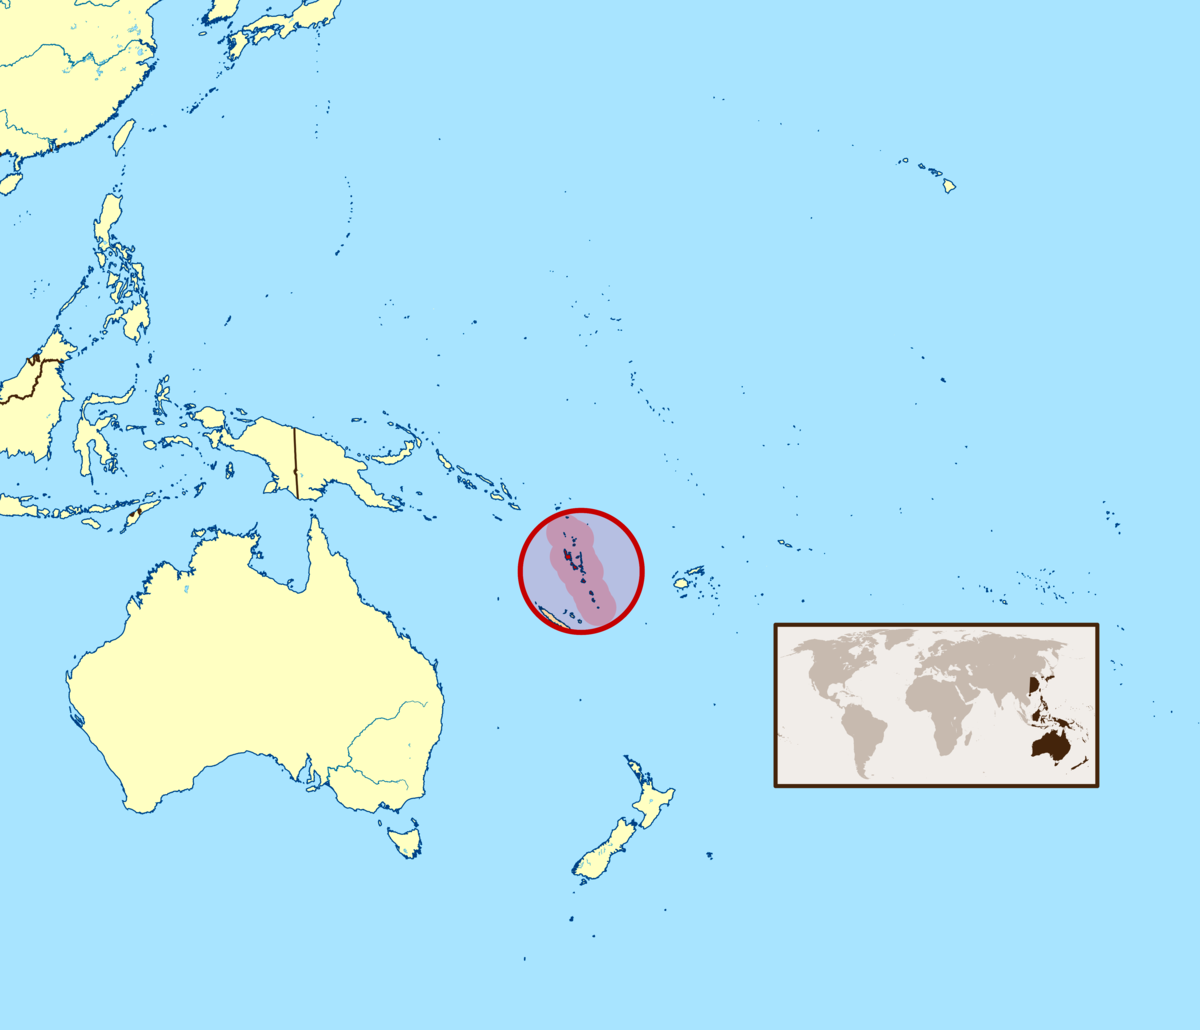 6 островов на карте. Вануату на карте мира. Острова Вануату на карте Австралии. Республика Вануату на карте. Соломоновы острова на карте Австралии.